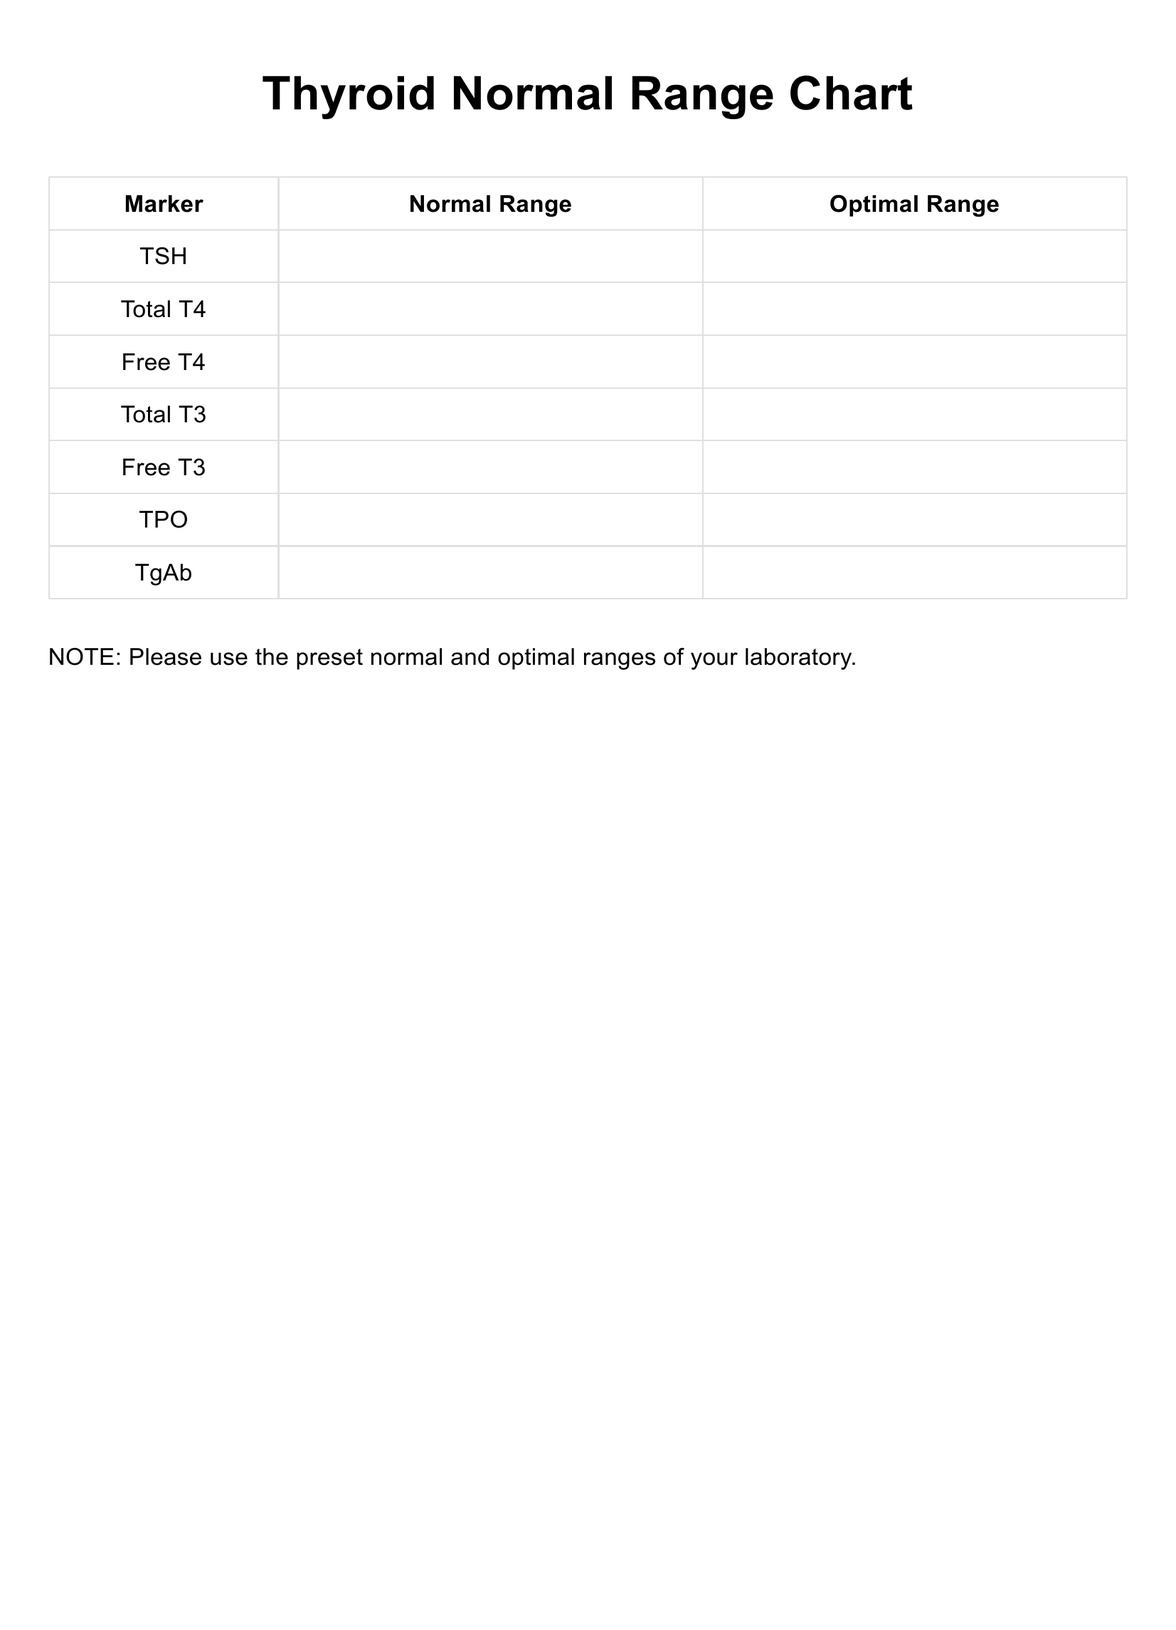 Thyroid Normal Range Chart PDF Example